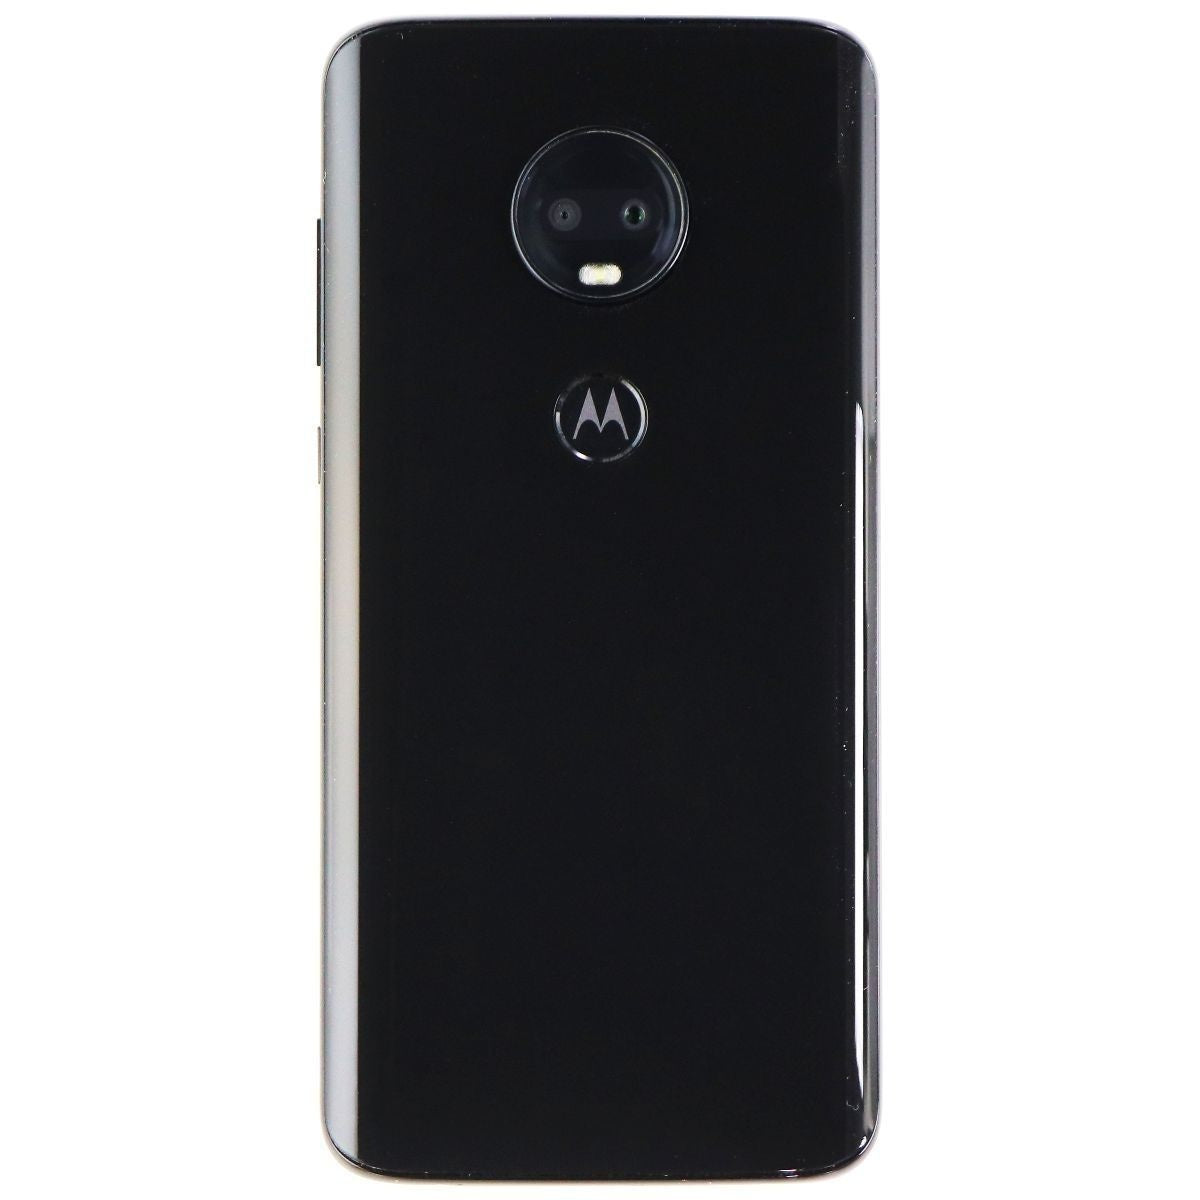 Motorola Moto G7 Smartphone (XT1962-1) AT&T + Verizon - 64GB / Ceramic Black Cell Phones & Smartphones Motorola    - Simple Cell Bulk Wholesale Pricing - USA Seller